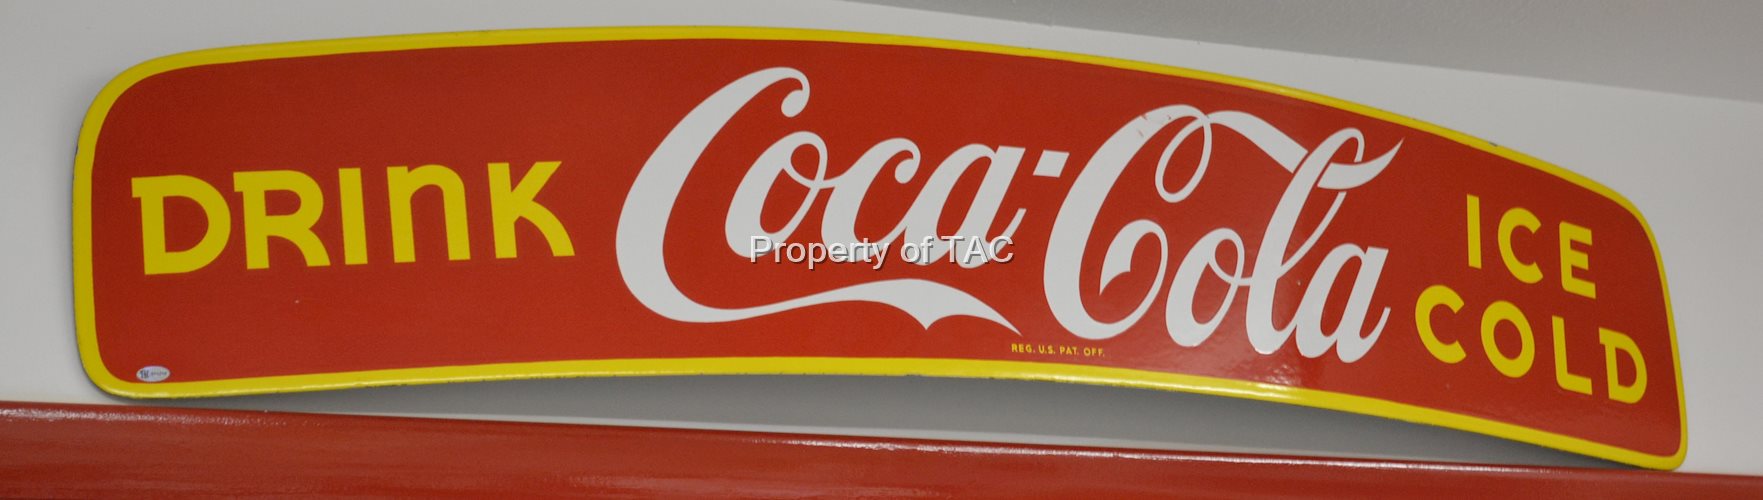 Drink Coca-Cola Ice Cold (truck valance)